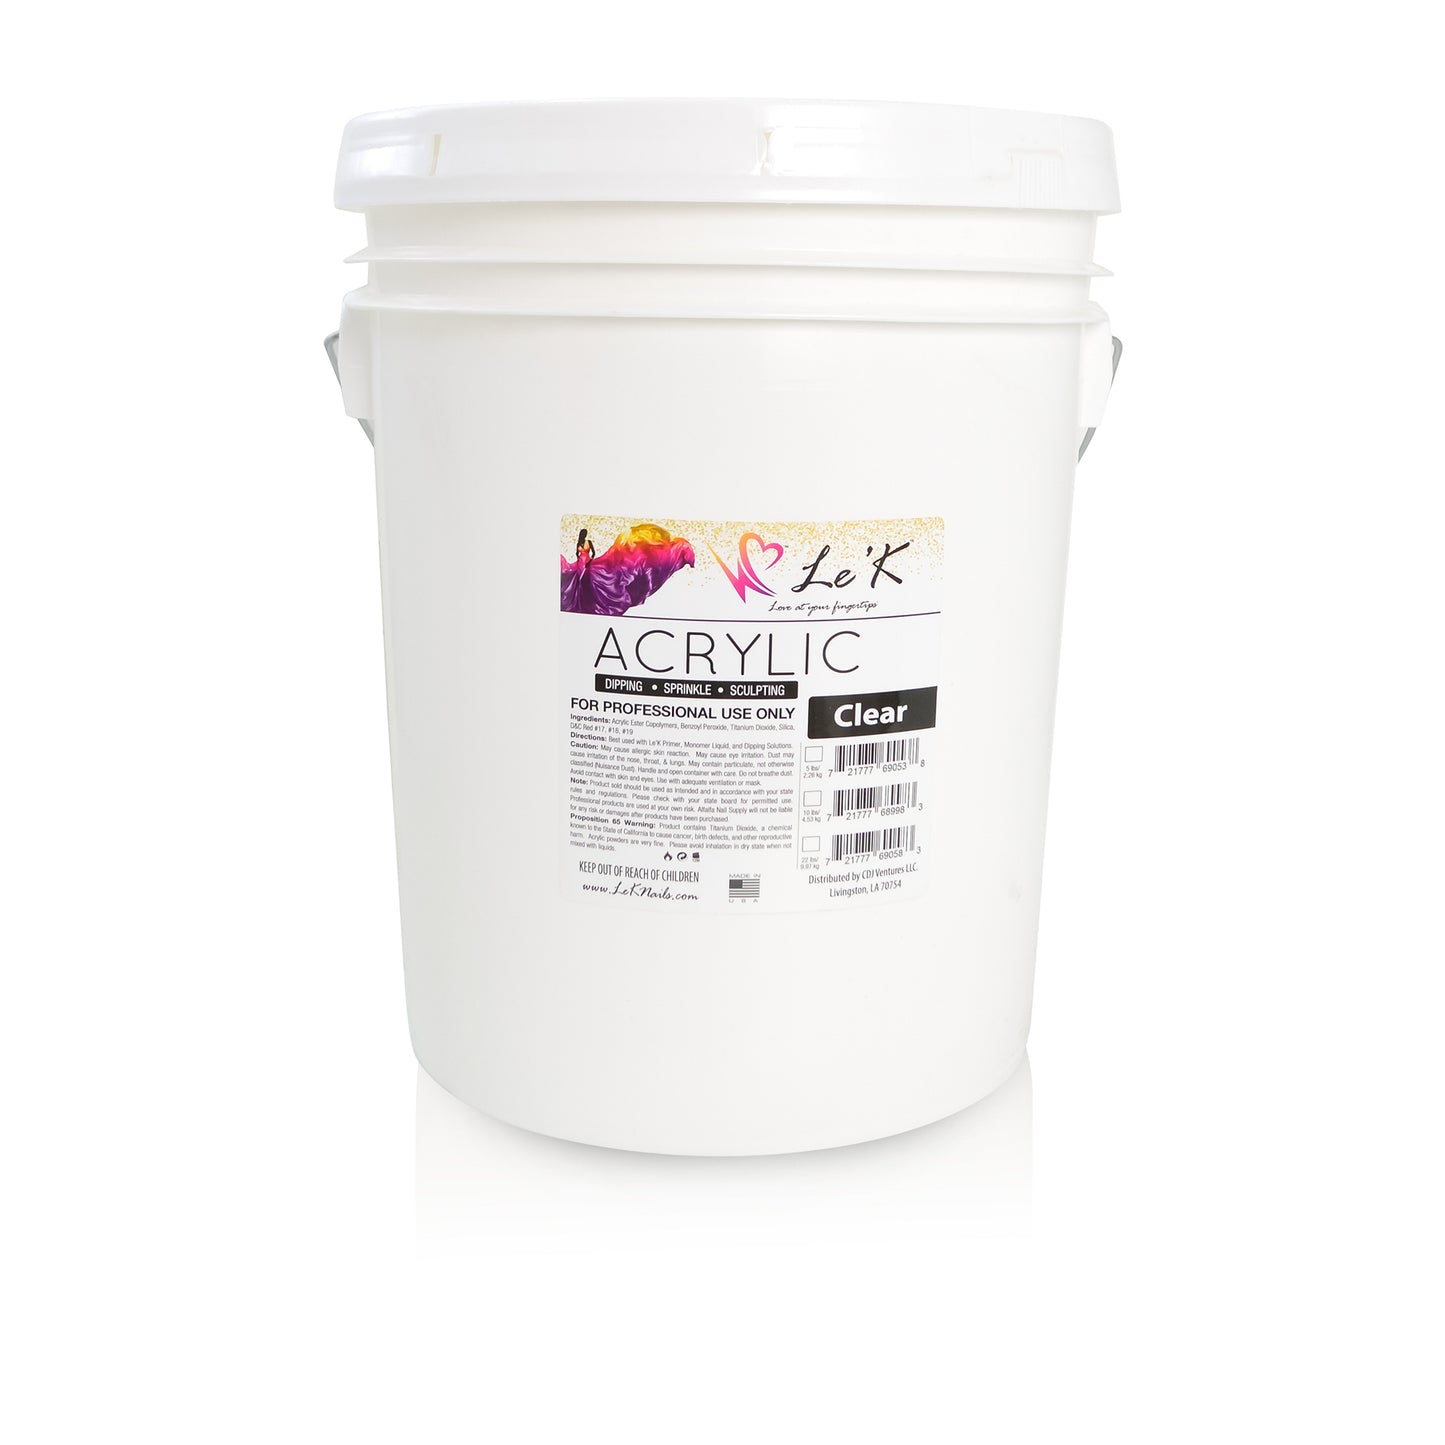 Le'K Acrylic Powder - Clear - 25 lbs